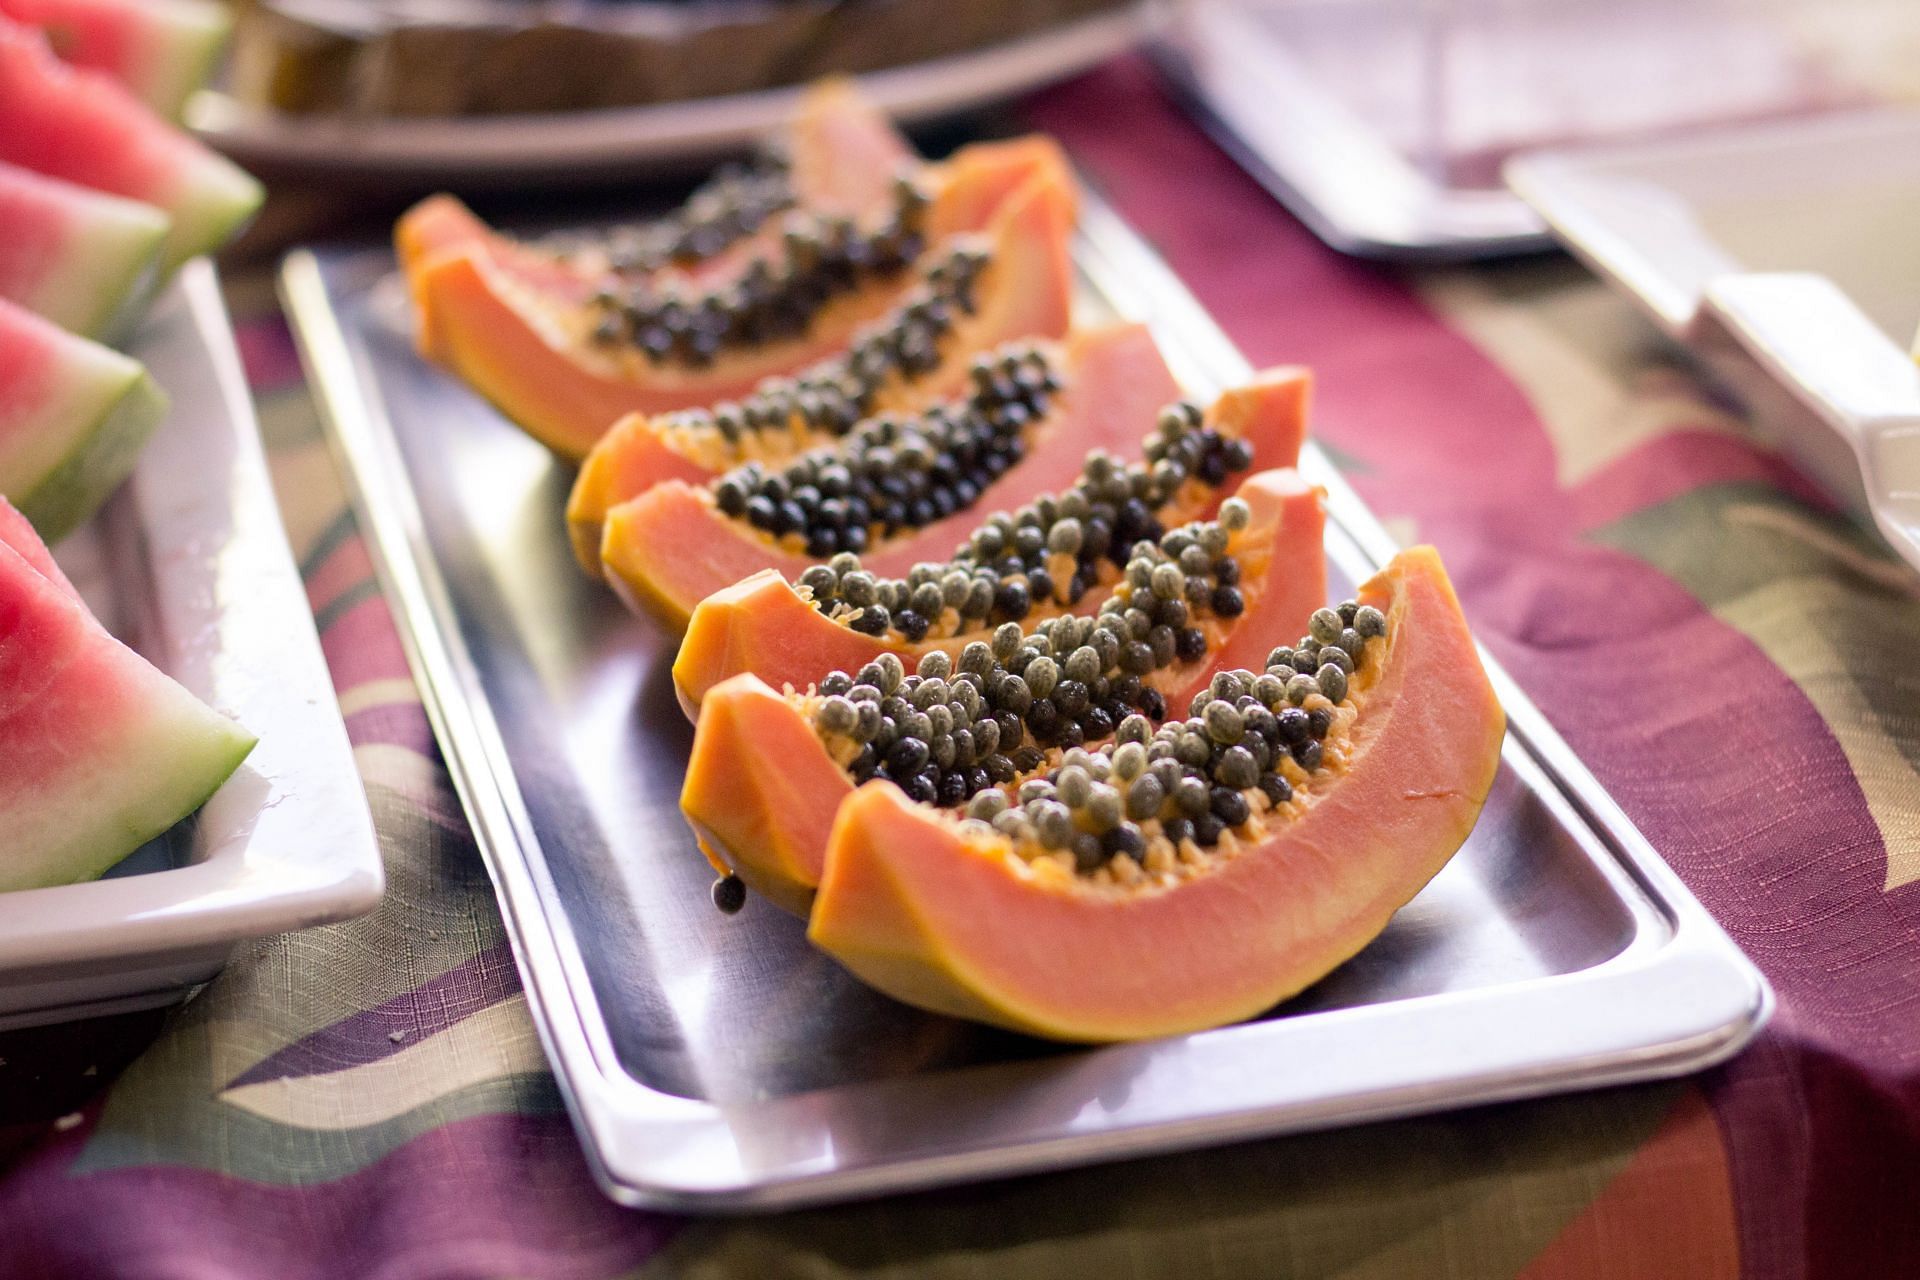 Papaya seed face pack is good for exfoliation. (Image via Unsplash/ Amanda Lins)